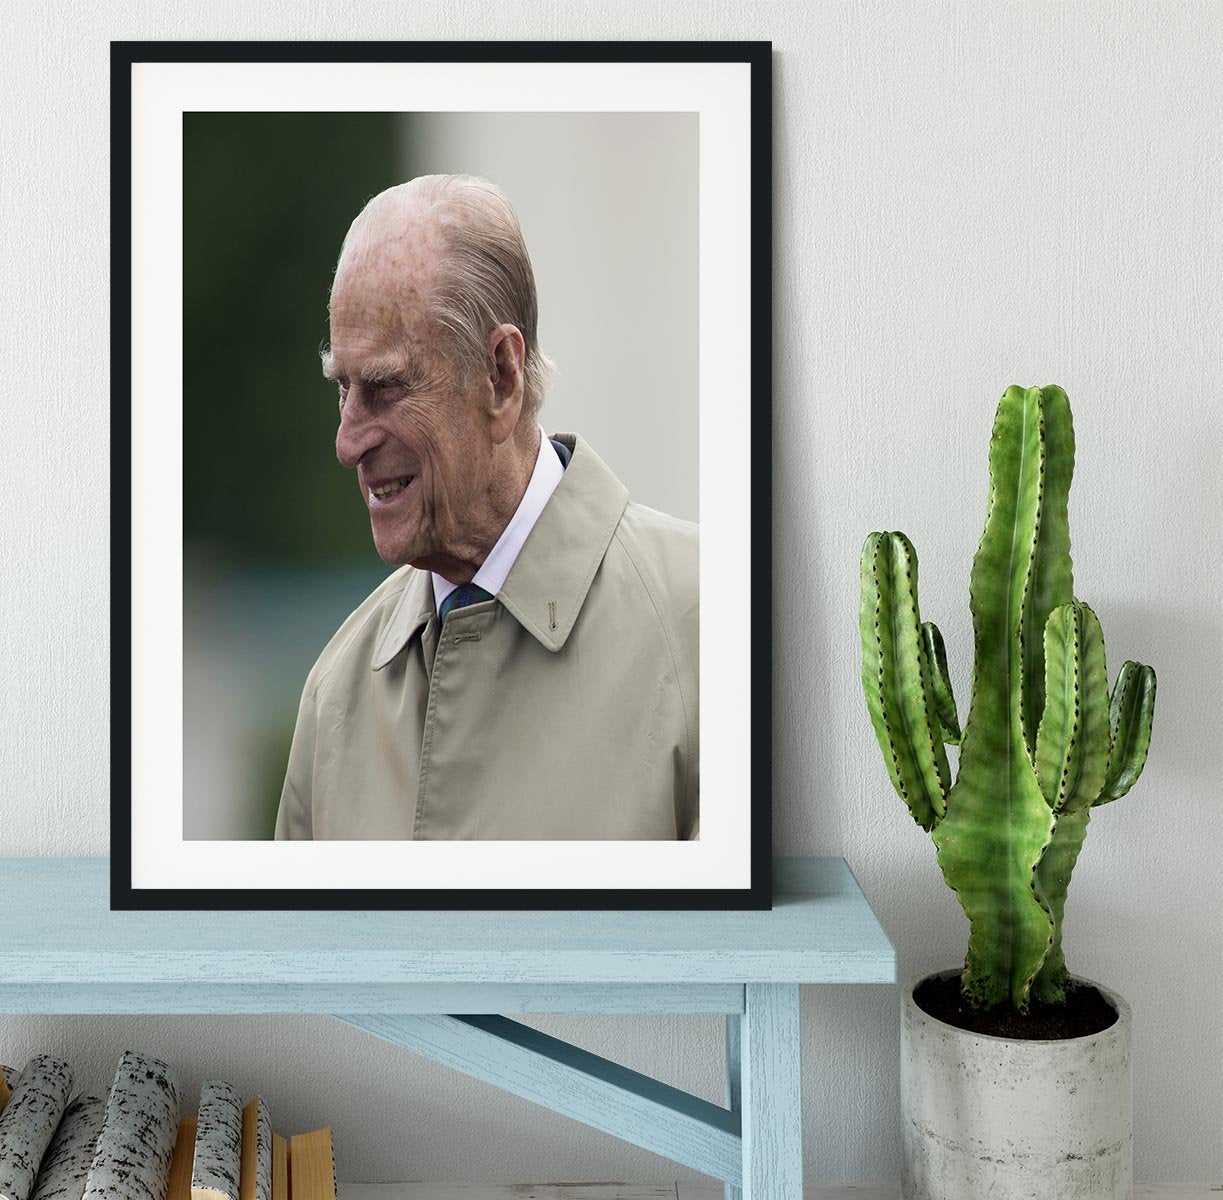 Prince Philip at the 90th birthday of Queen Elizabeth II Framed Print - Canvas Art Rocks - 1